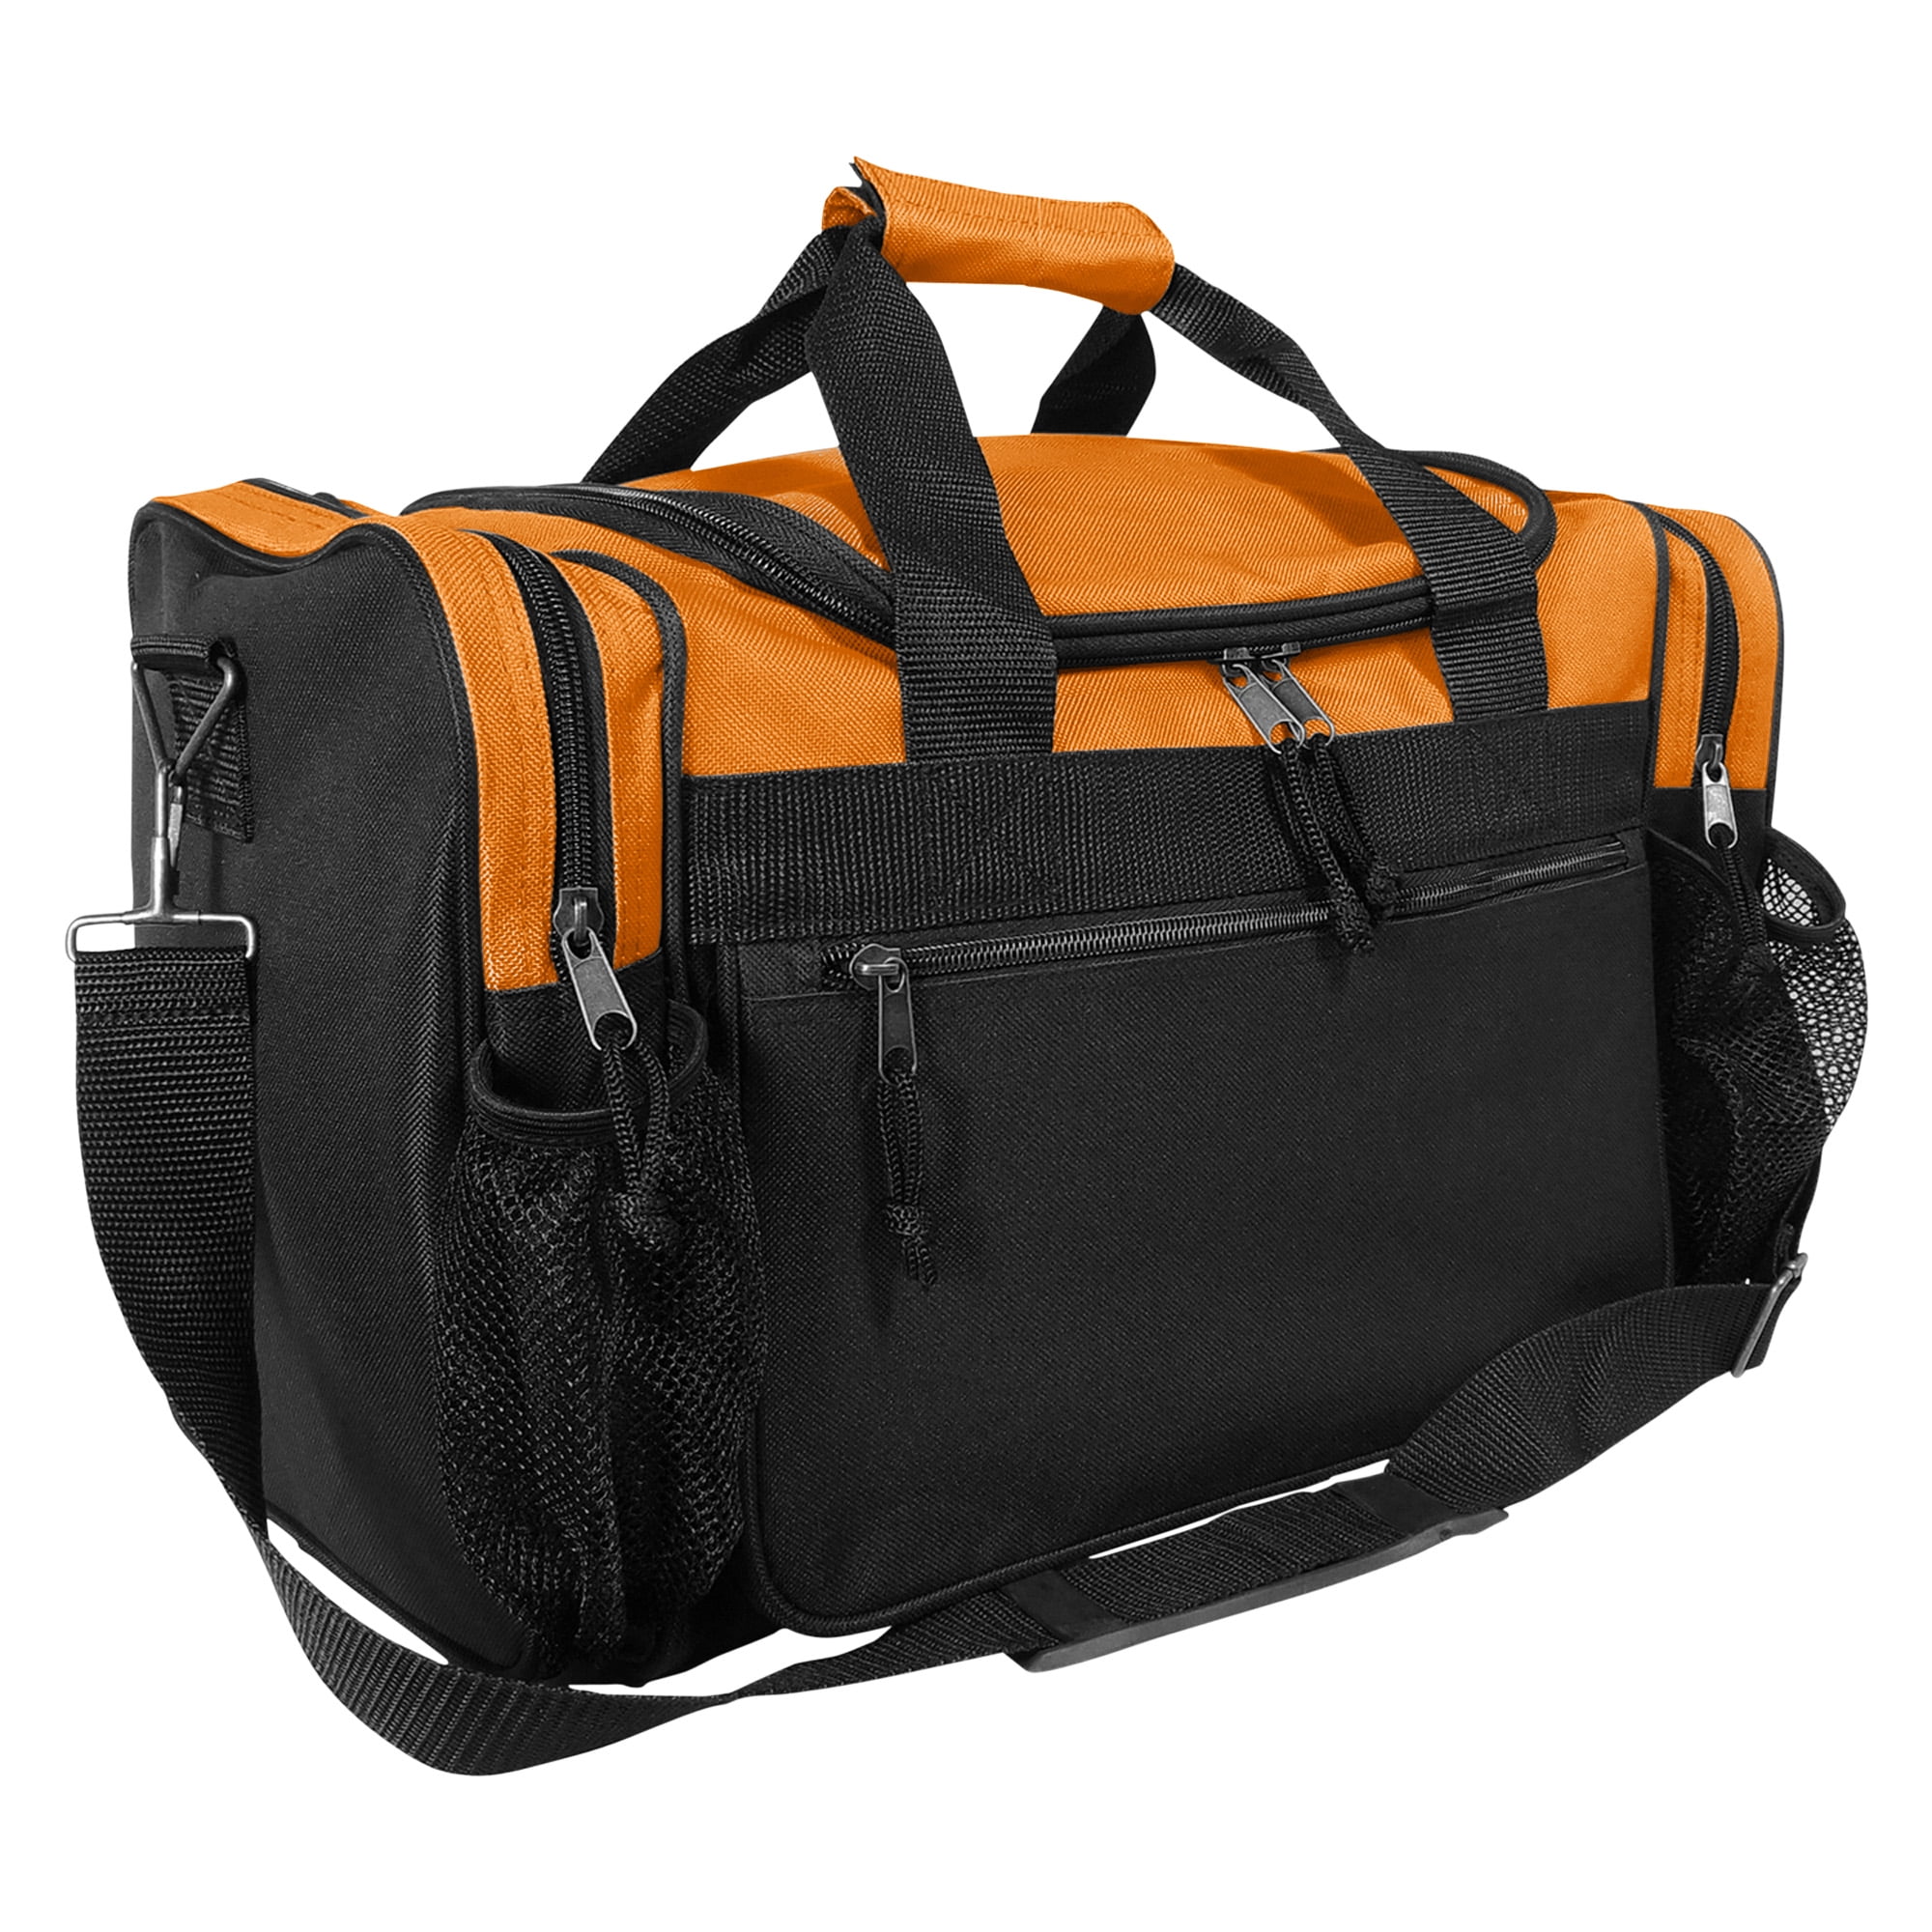 DALIX 17" Duffle Bag Sports Travel Gym Bag with Mesh